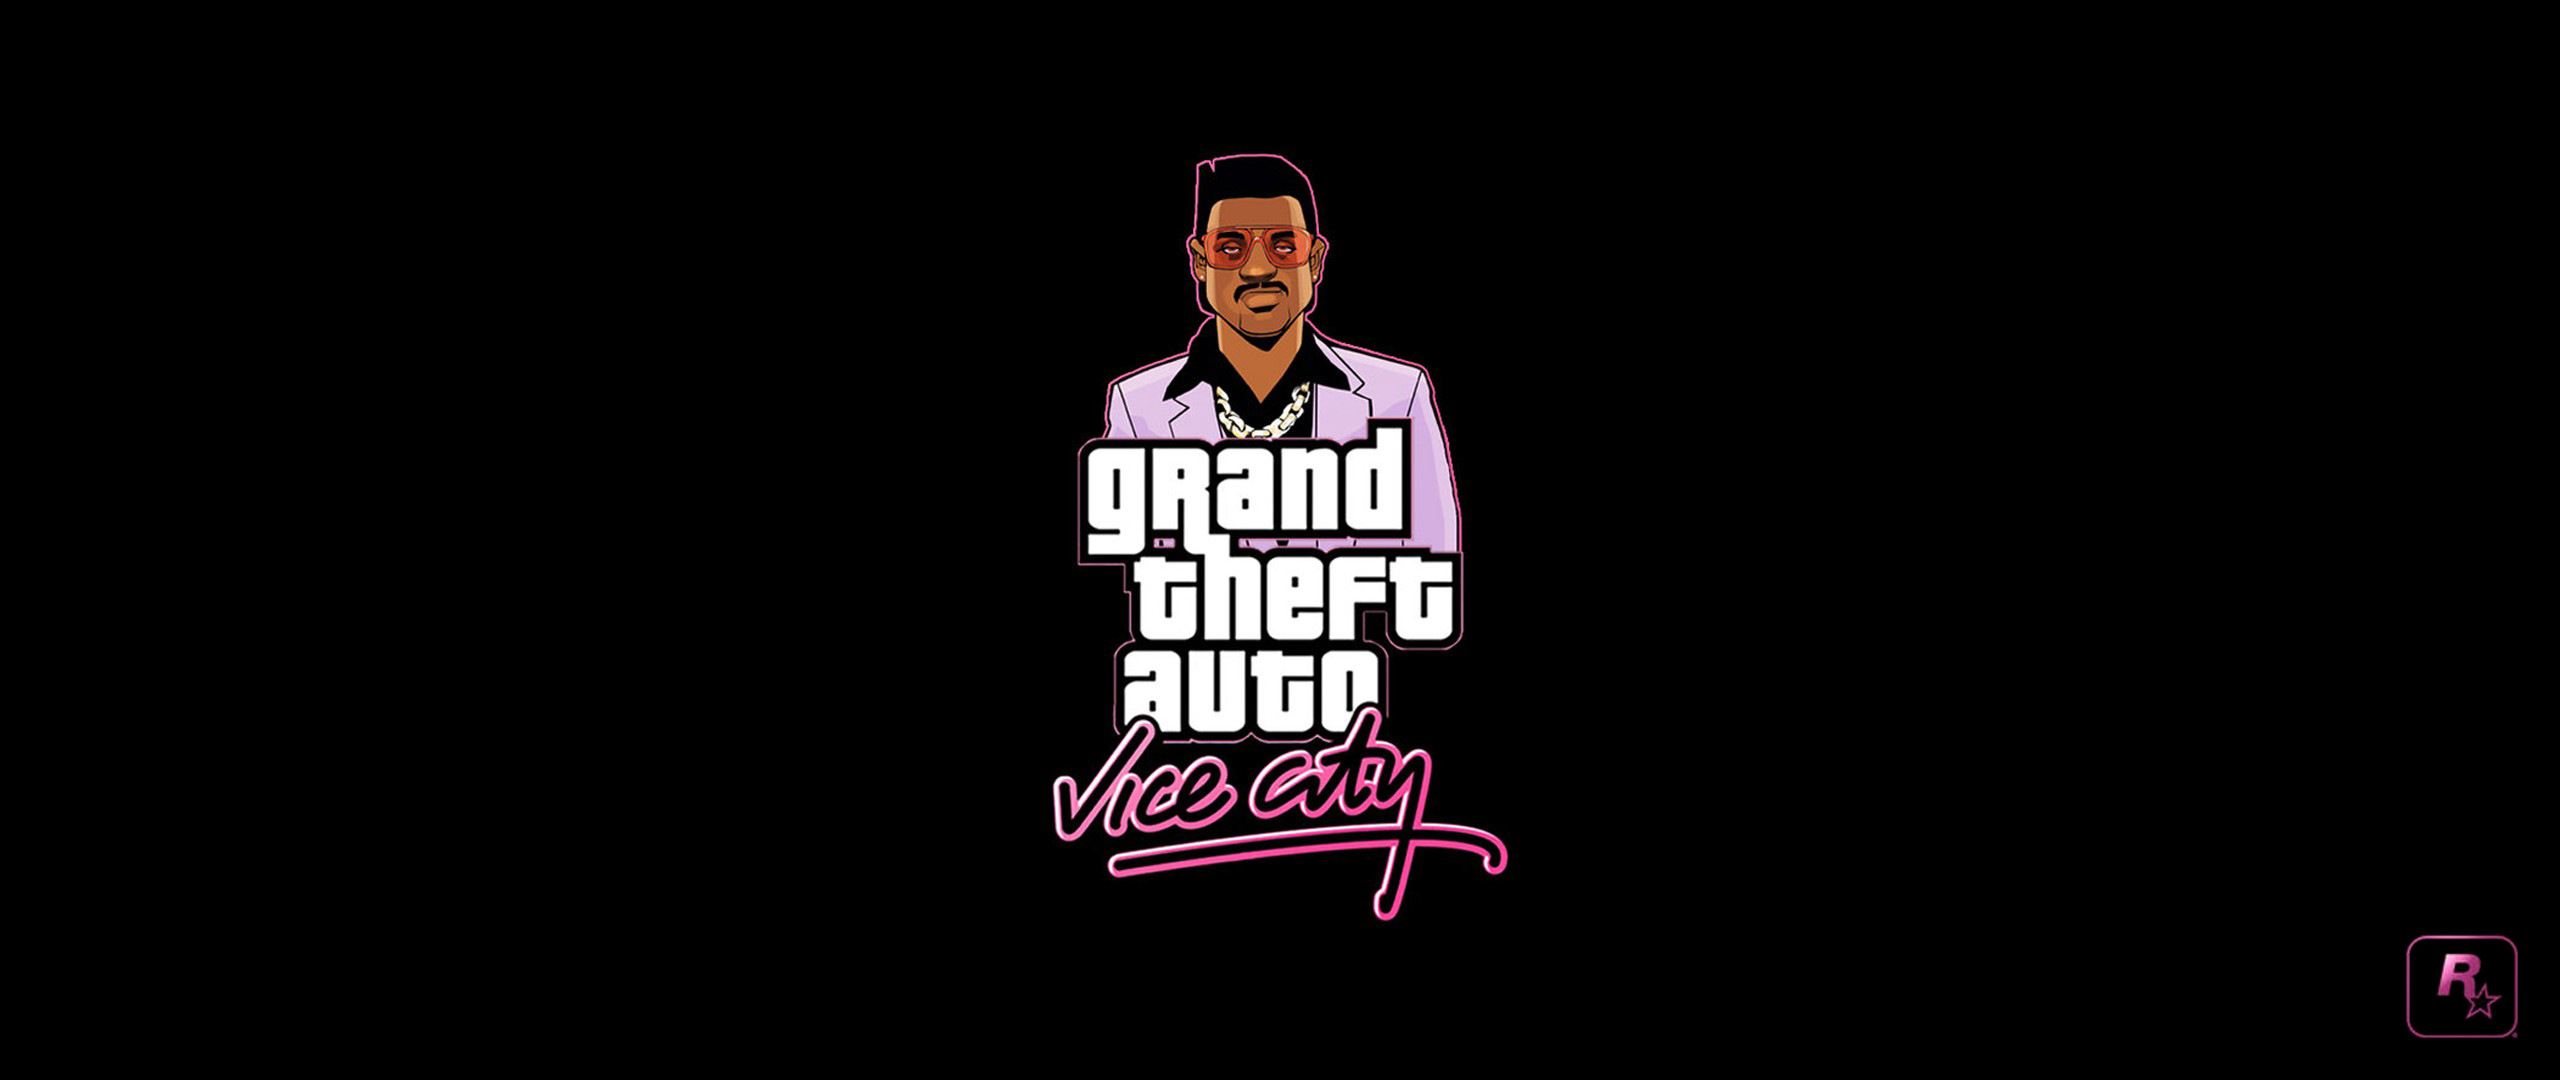 Ultra Wide Video Games Grand Theft Auto Grand Theft Auto Vice City 2560x1080